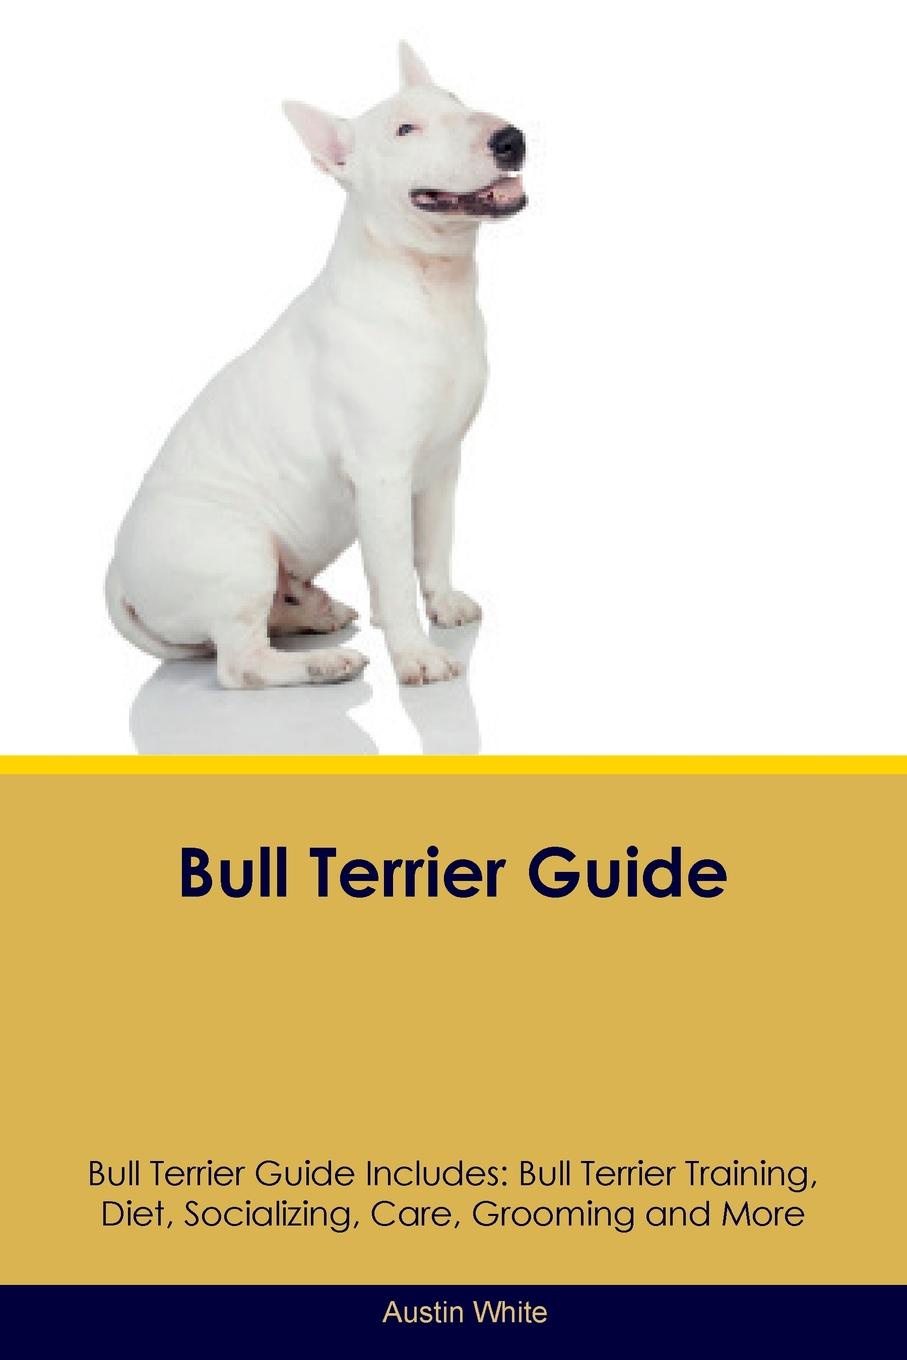 Bull Terrier Guide Bull Terrier Guide Includes. Bull Terrier Training, Diet, Socializing, Care, Grooming, Breeding and More